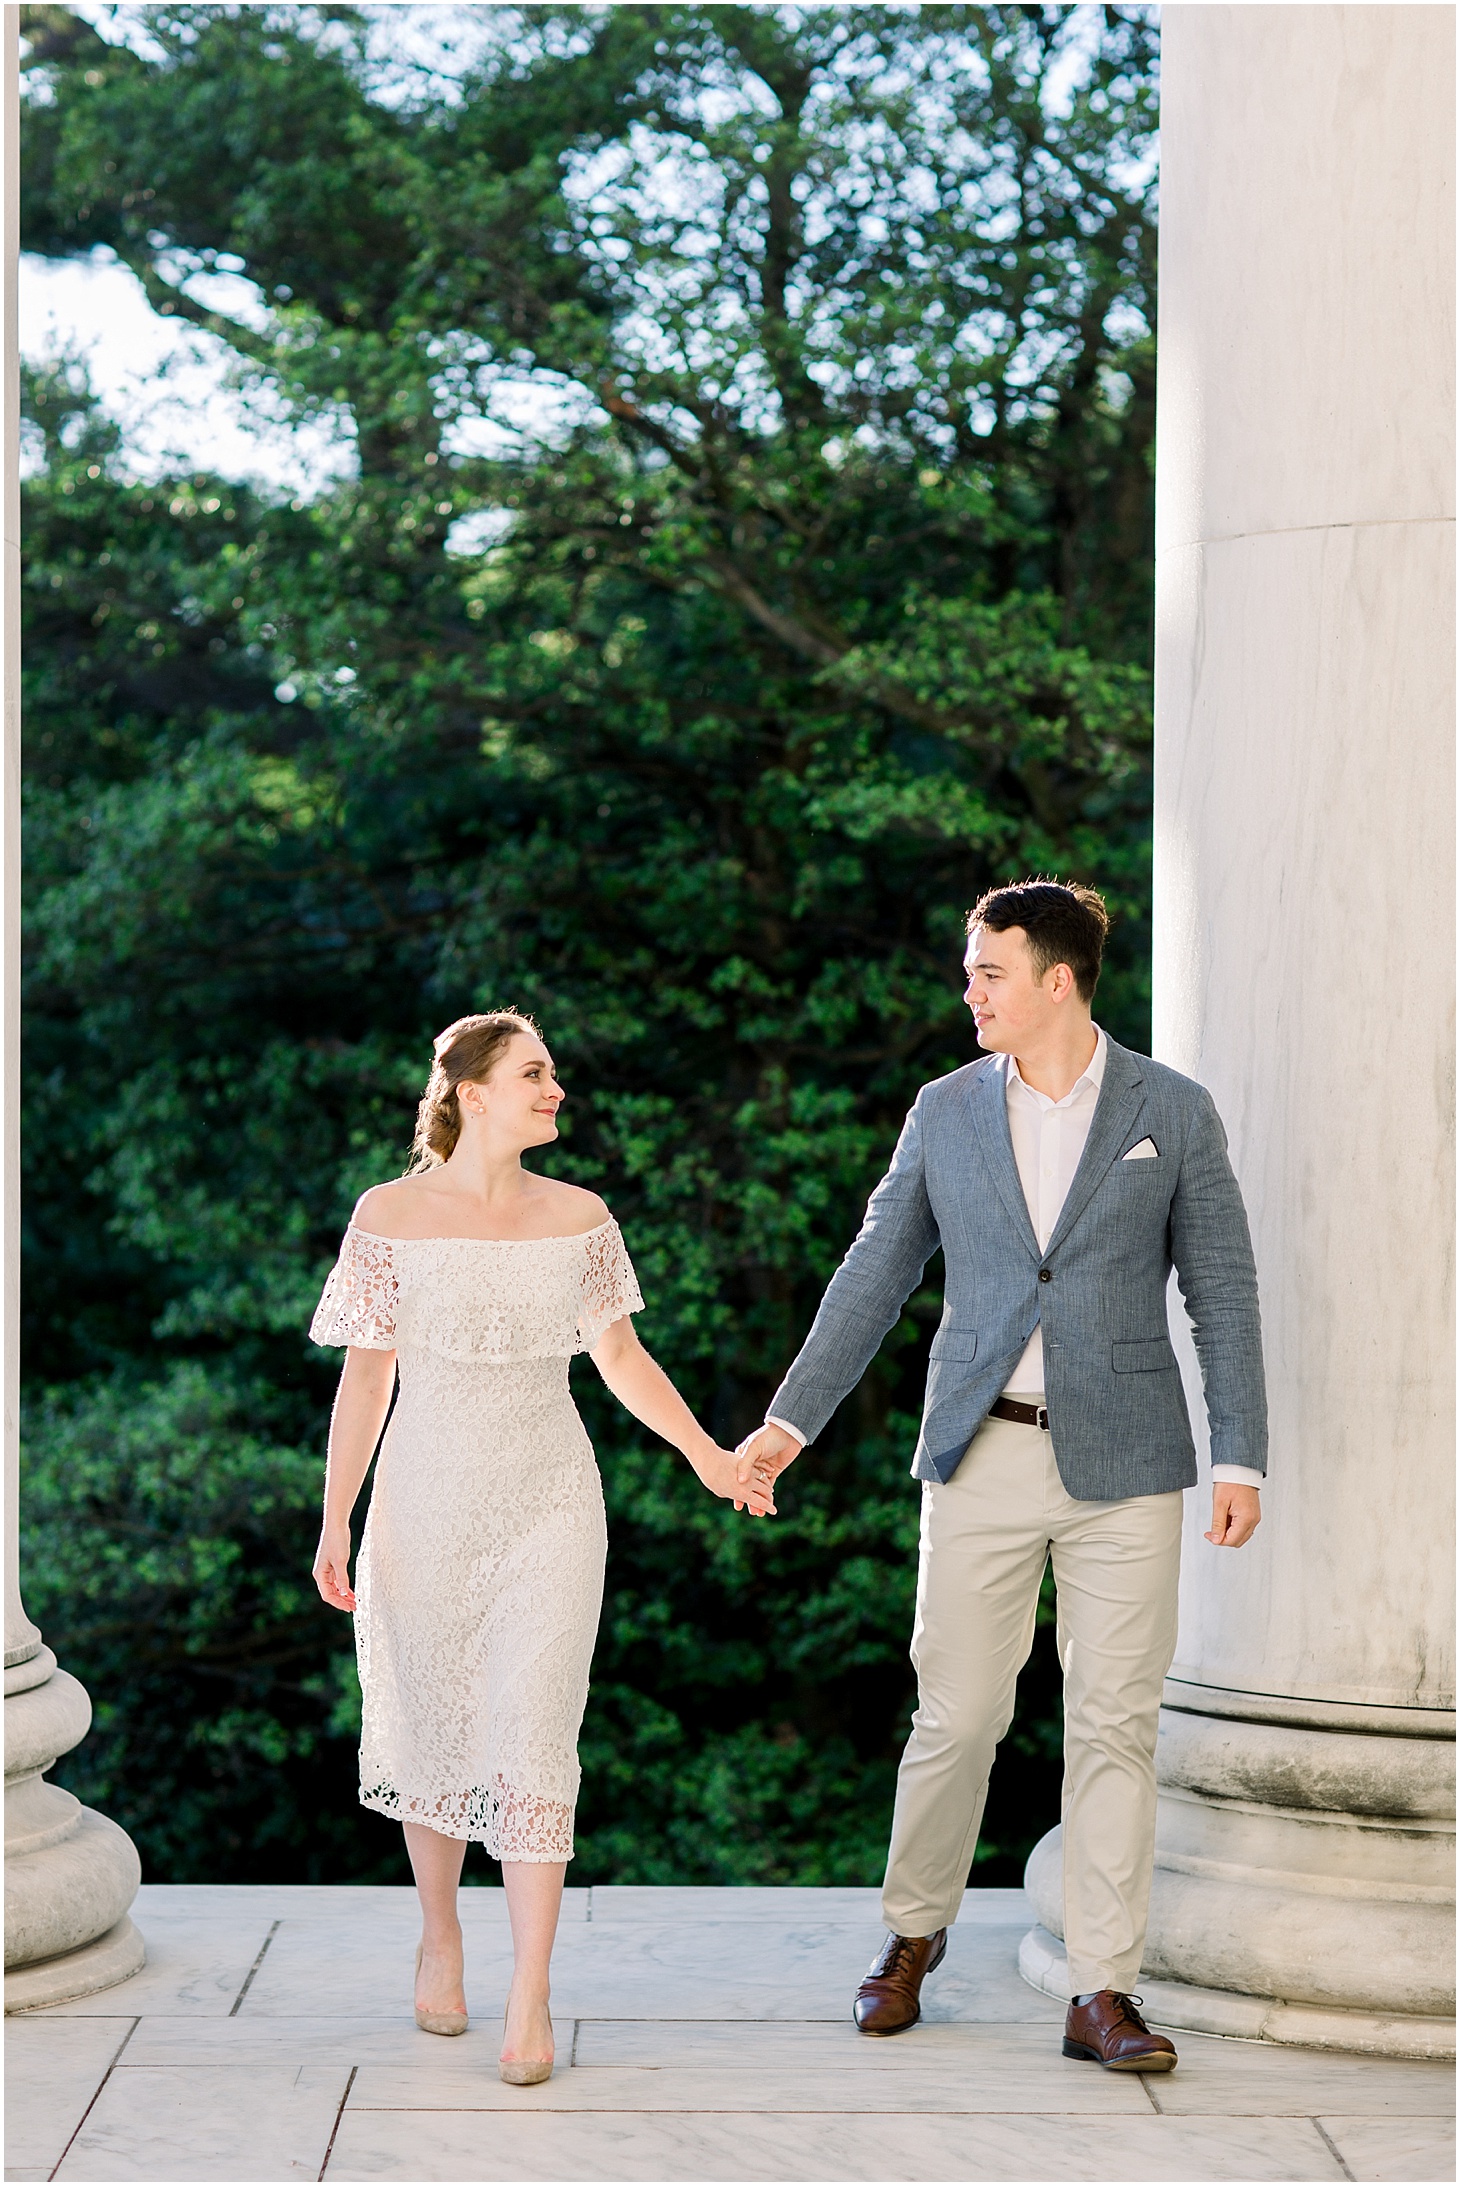 Portraits at the Jefferson Memorial, Intimate Sunrise Wedding Portraits at the Lincoln Memorial, Sarah Bradshaw Photography, DC Wedding Photographer